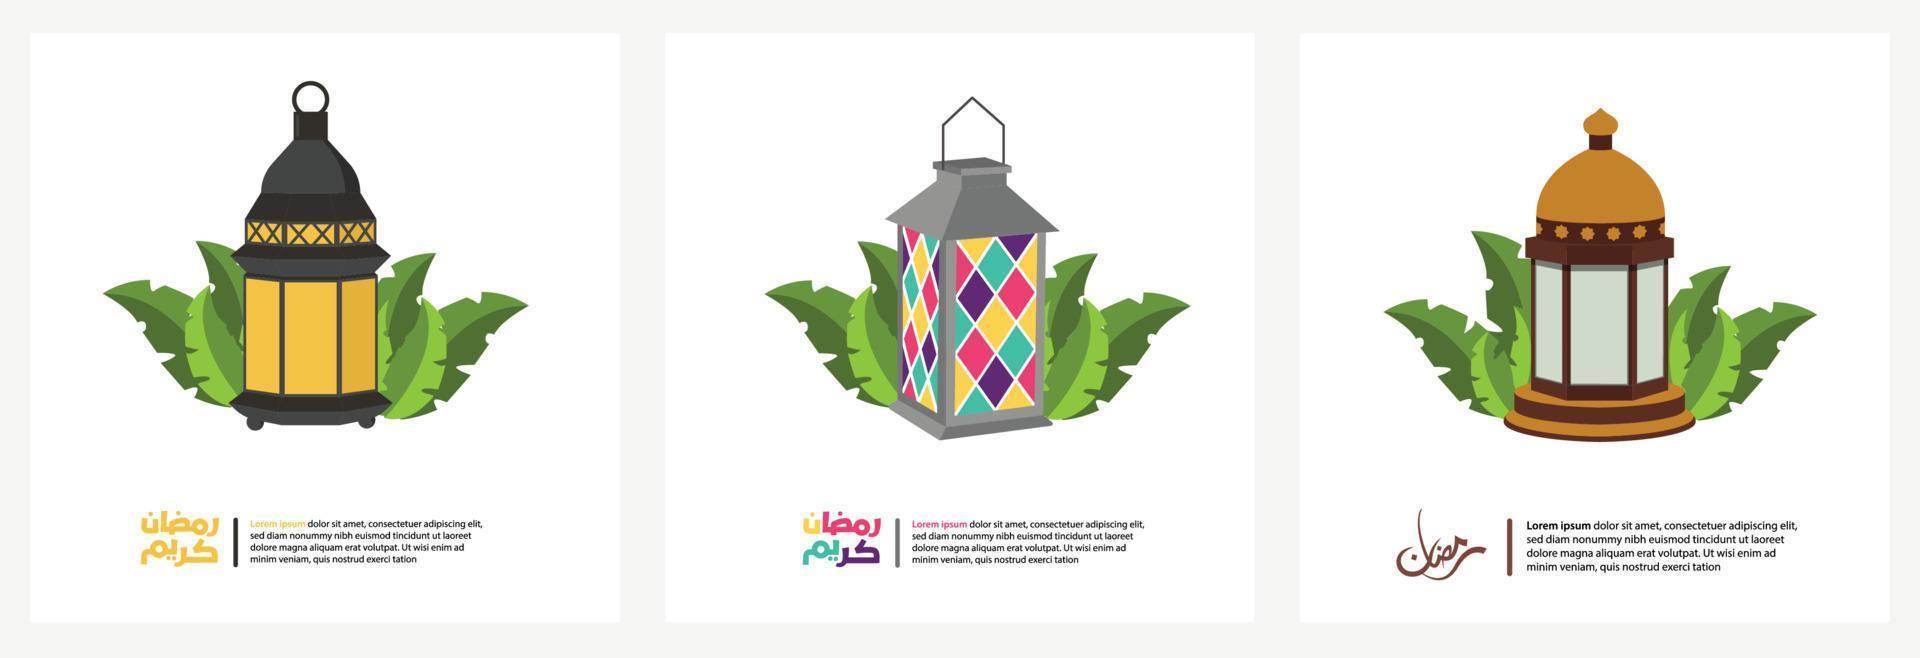 Ramadan Lantern Pattern.Vintage lantern linear icons. Vector muslim antique lamp symbols. Ramadan kareem gold calligraphy with islamic greeting card illustration.